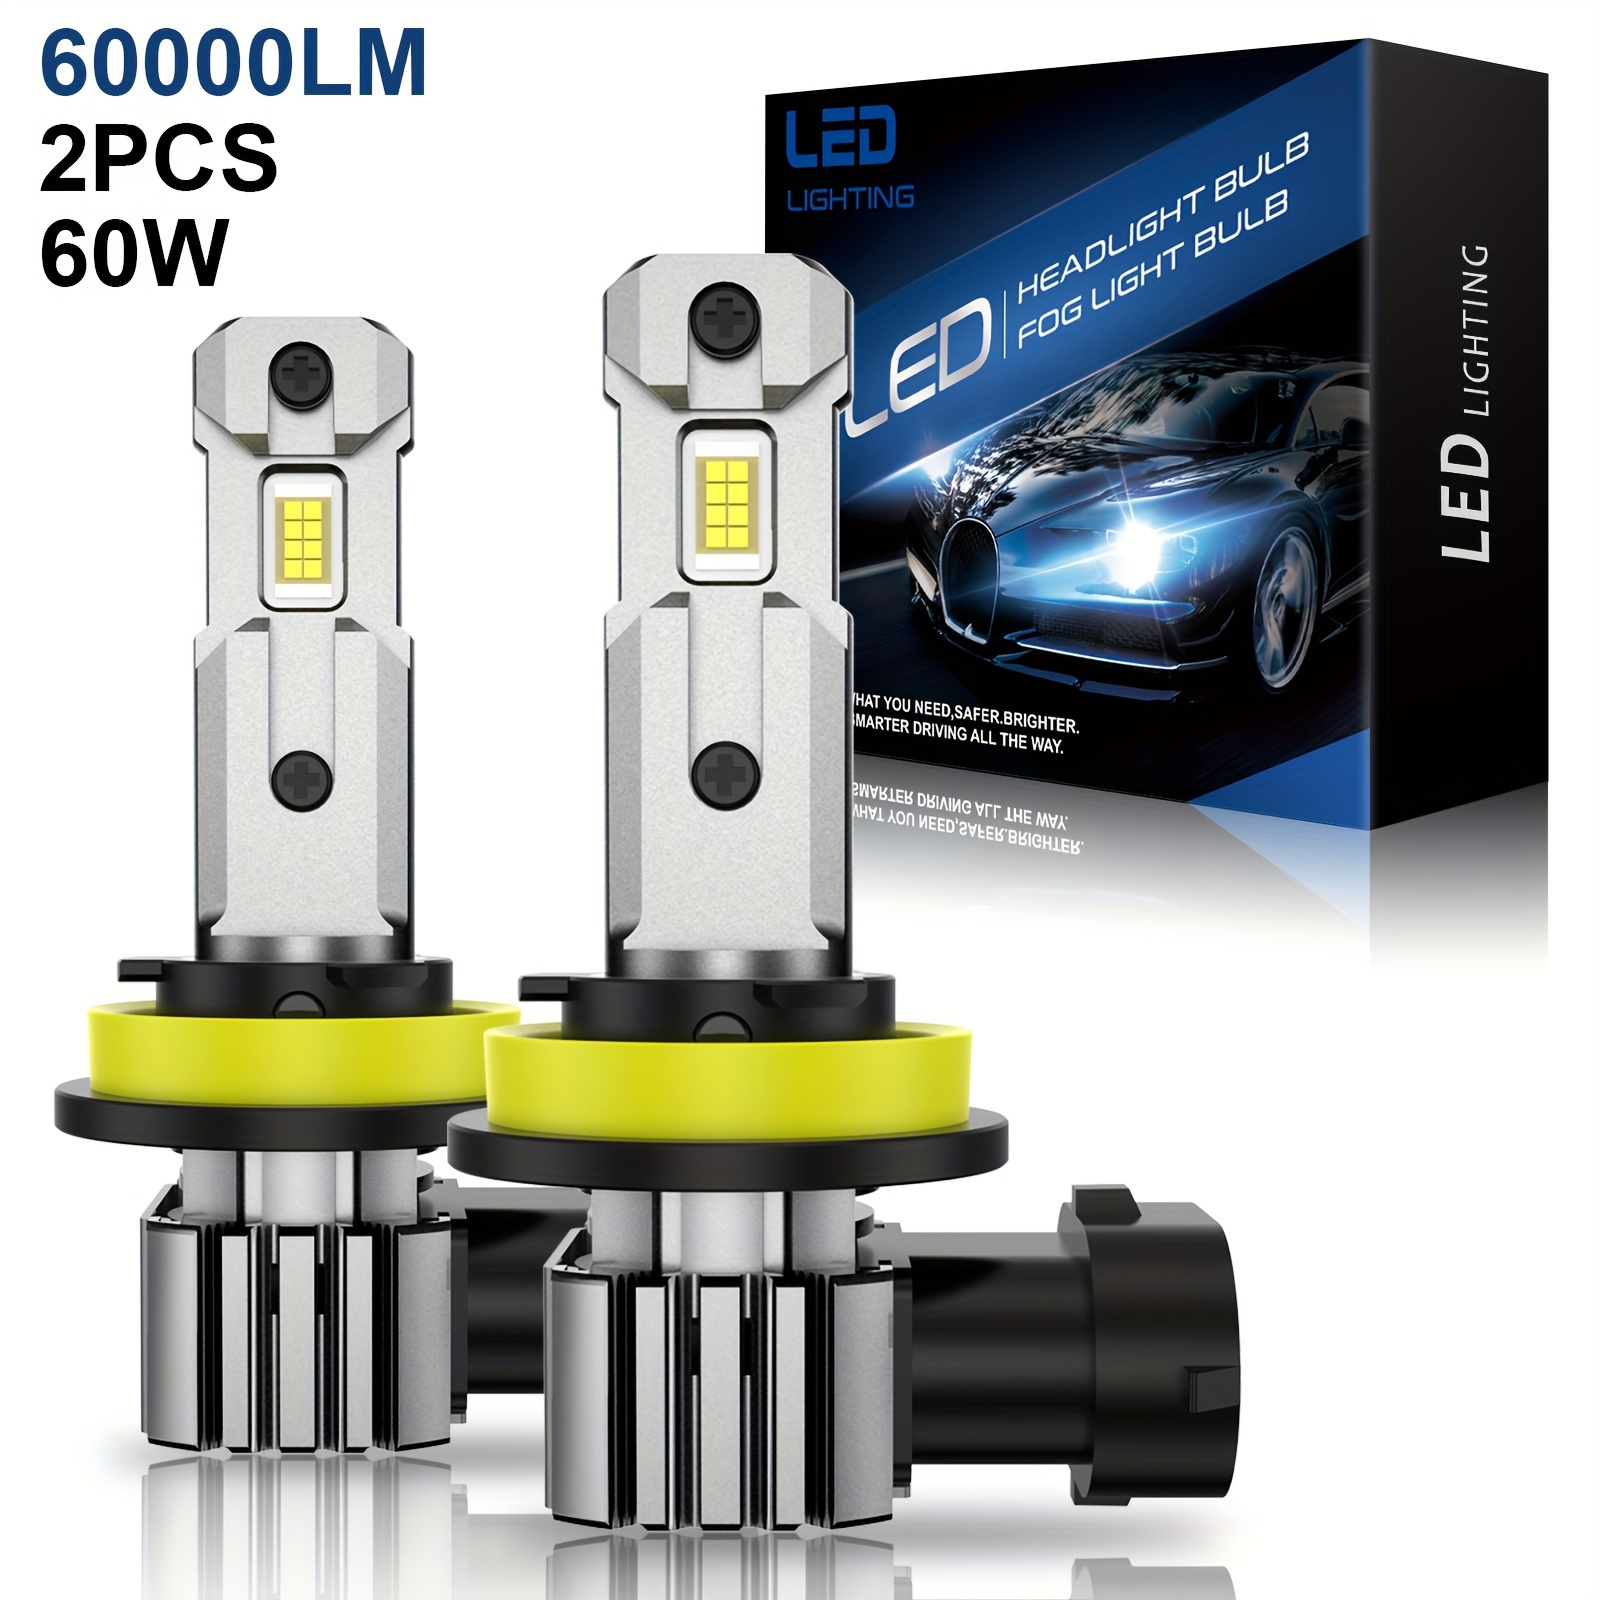 

H11 Car Light Upgrade Your Car Led Headlights 2pcs/4pcs Support- Models Of H11, H8, H9, Hb3, 9005, Hb4, 9006 -60000lm Super Bright Car Light 6500k White Light, Plug And Play